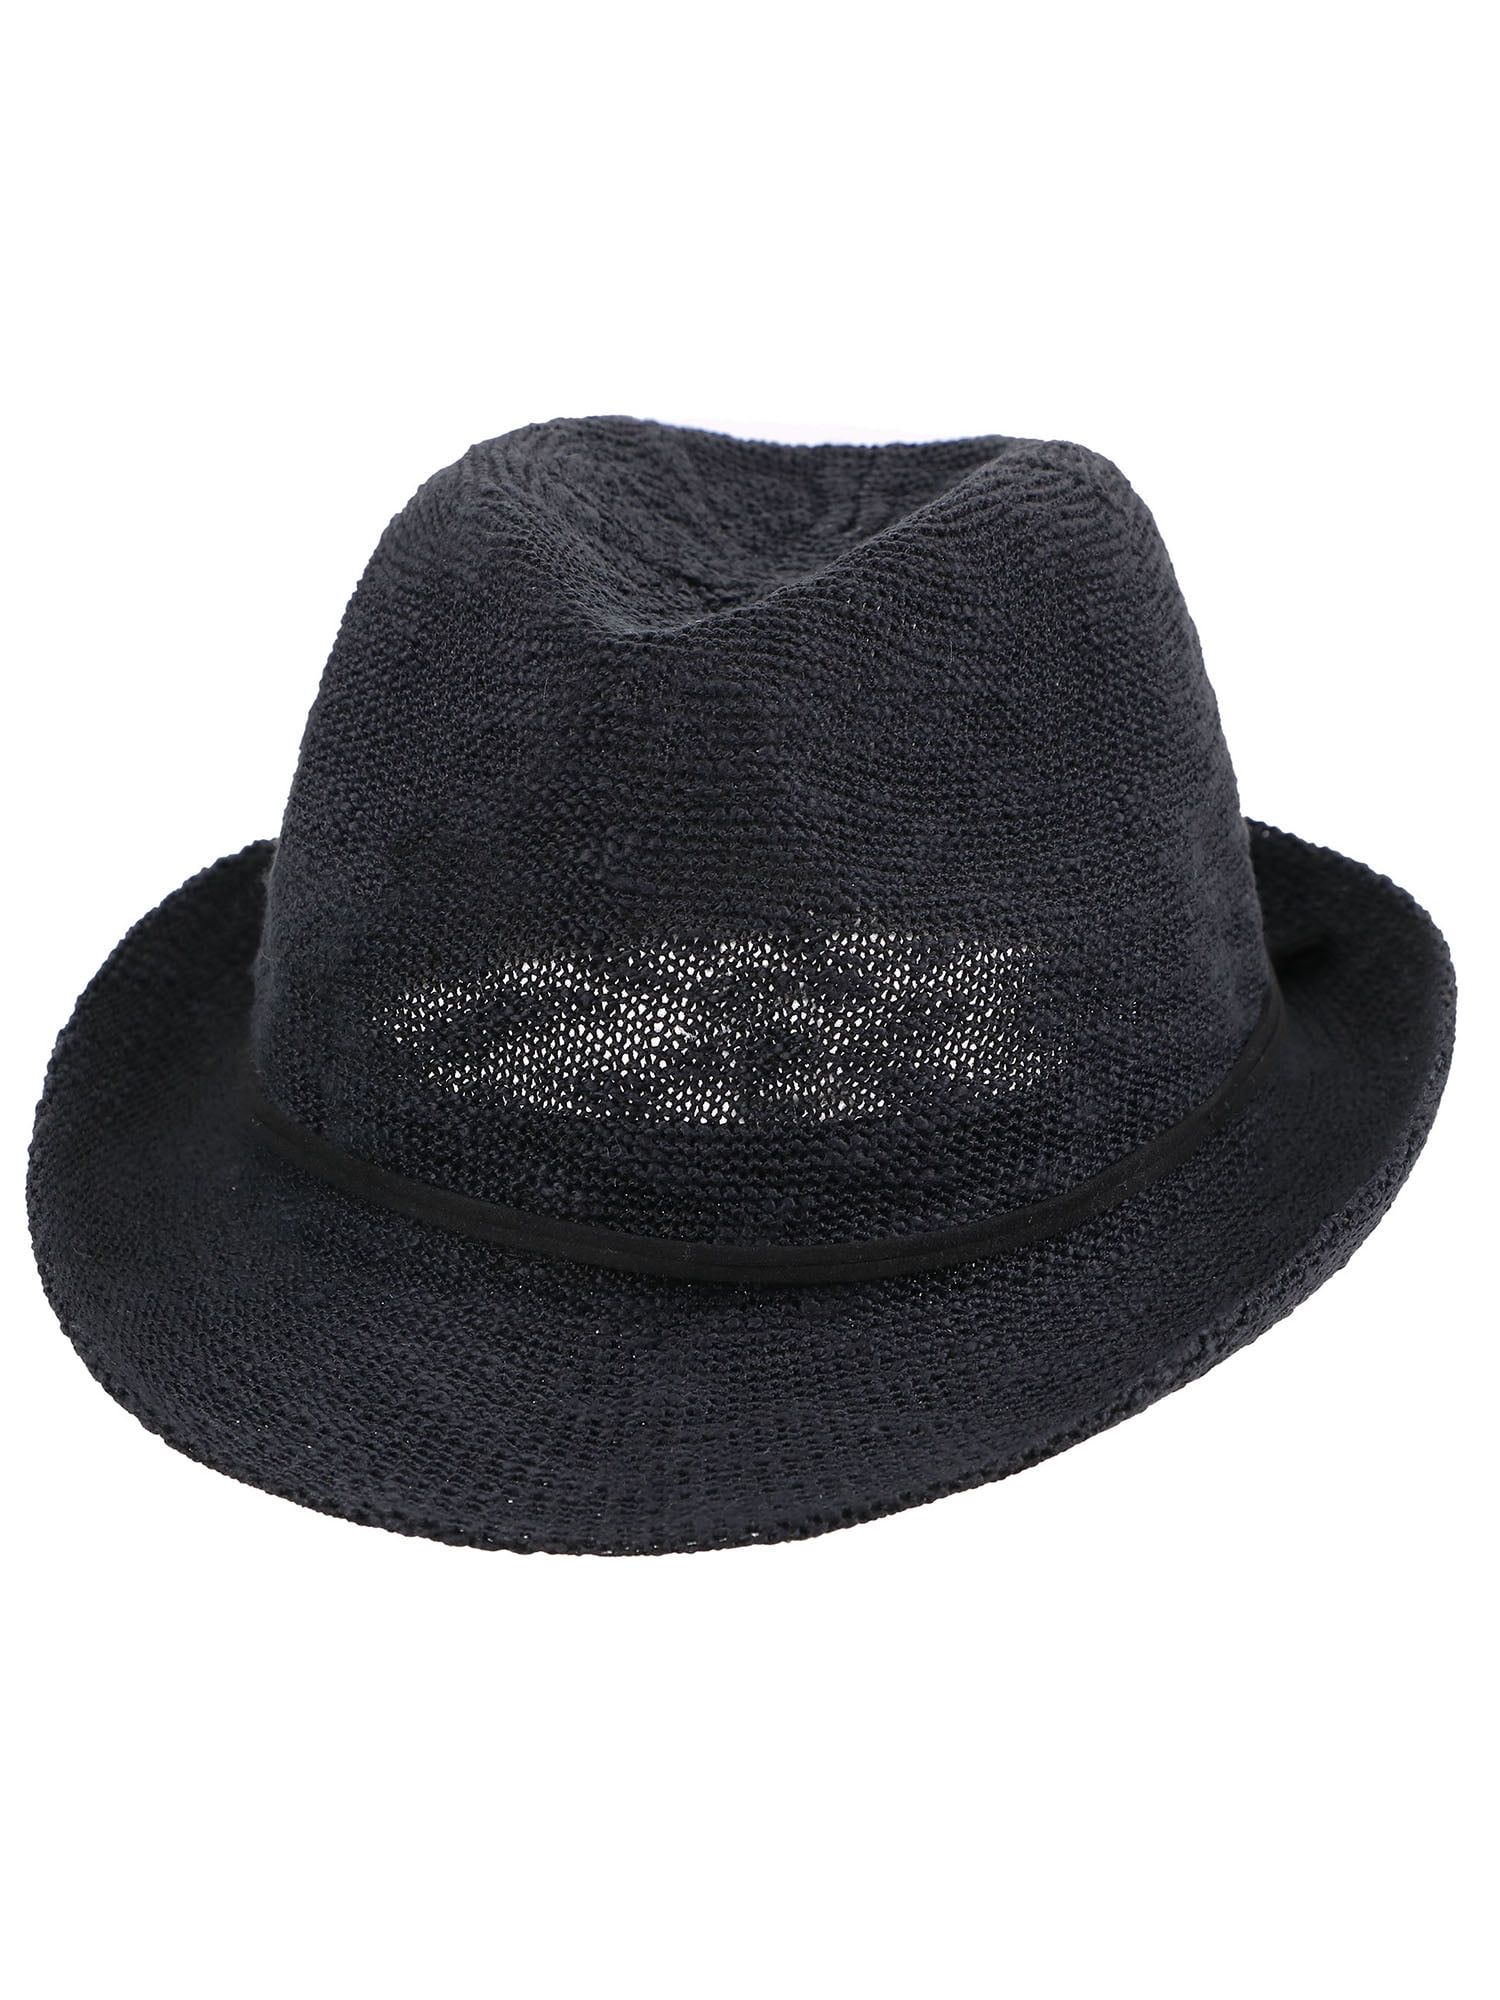 Simplicity Unisex Lightweight Packable Foldable Straw Fedora Hat Beach Sun Hat